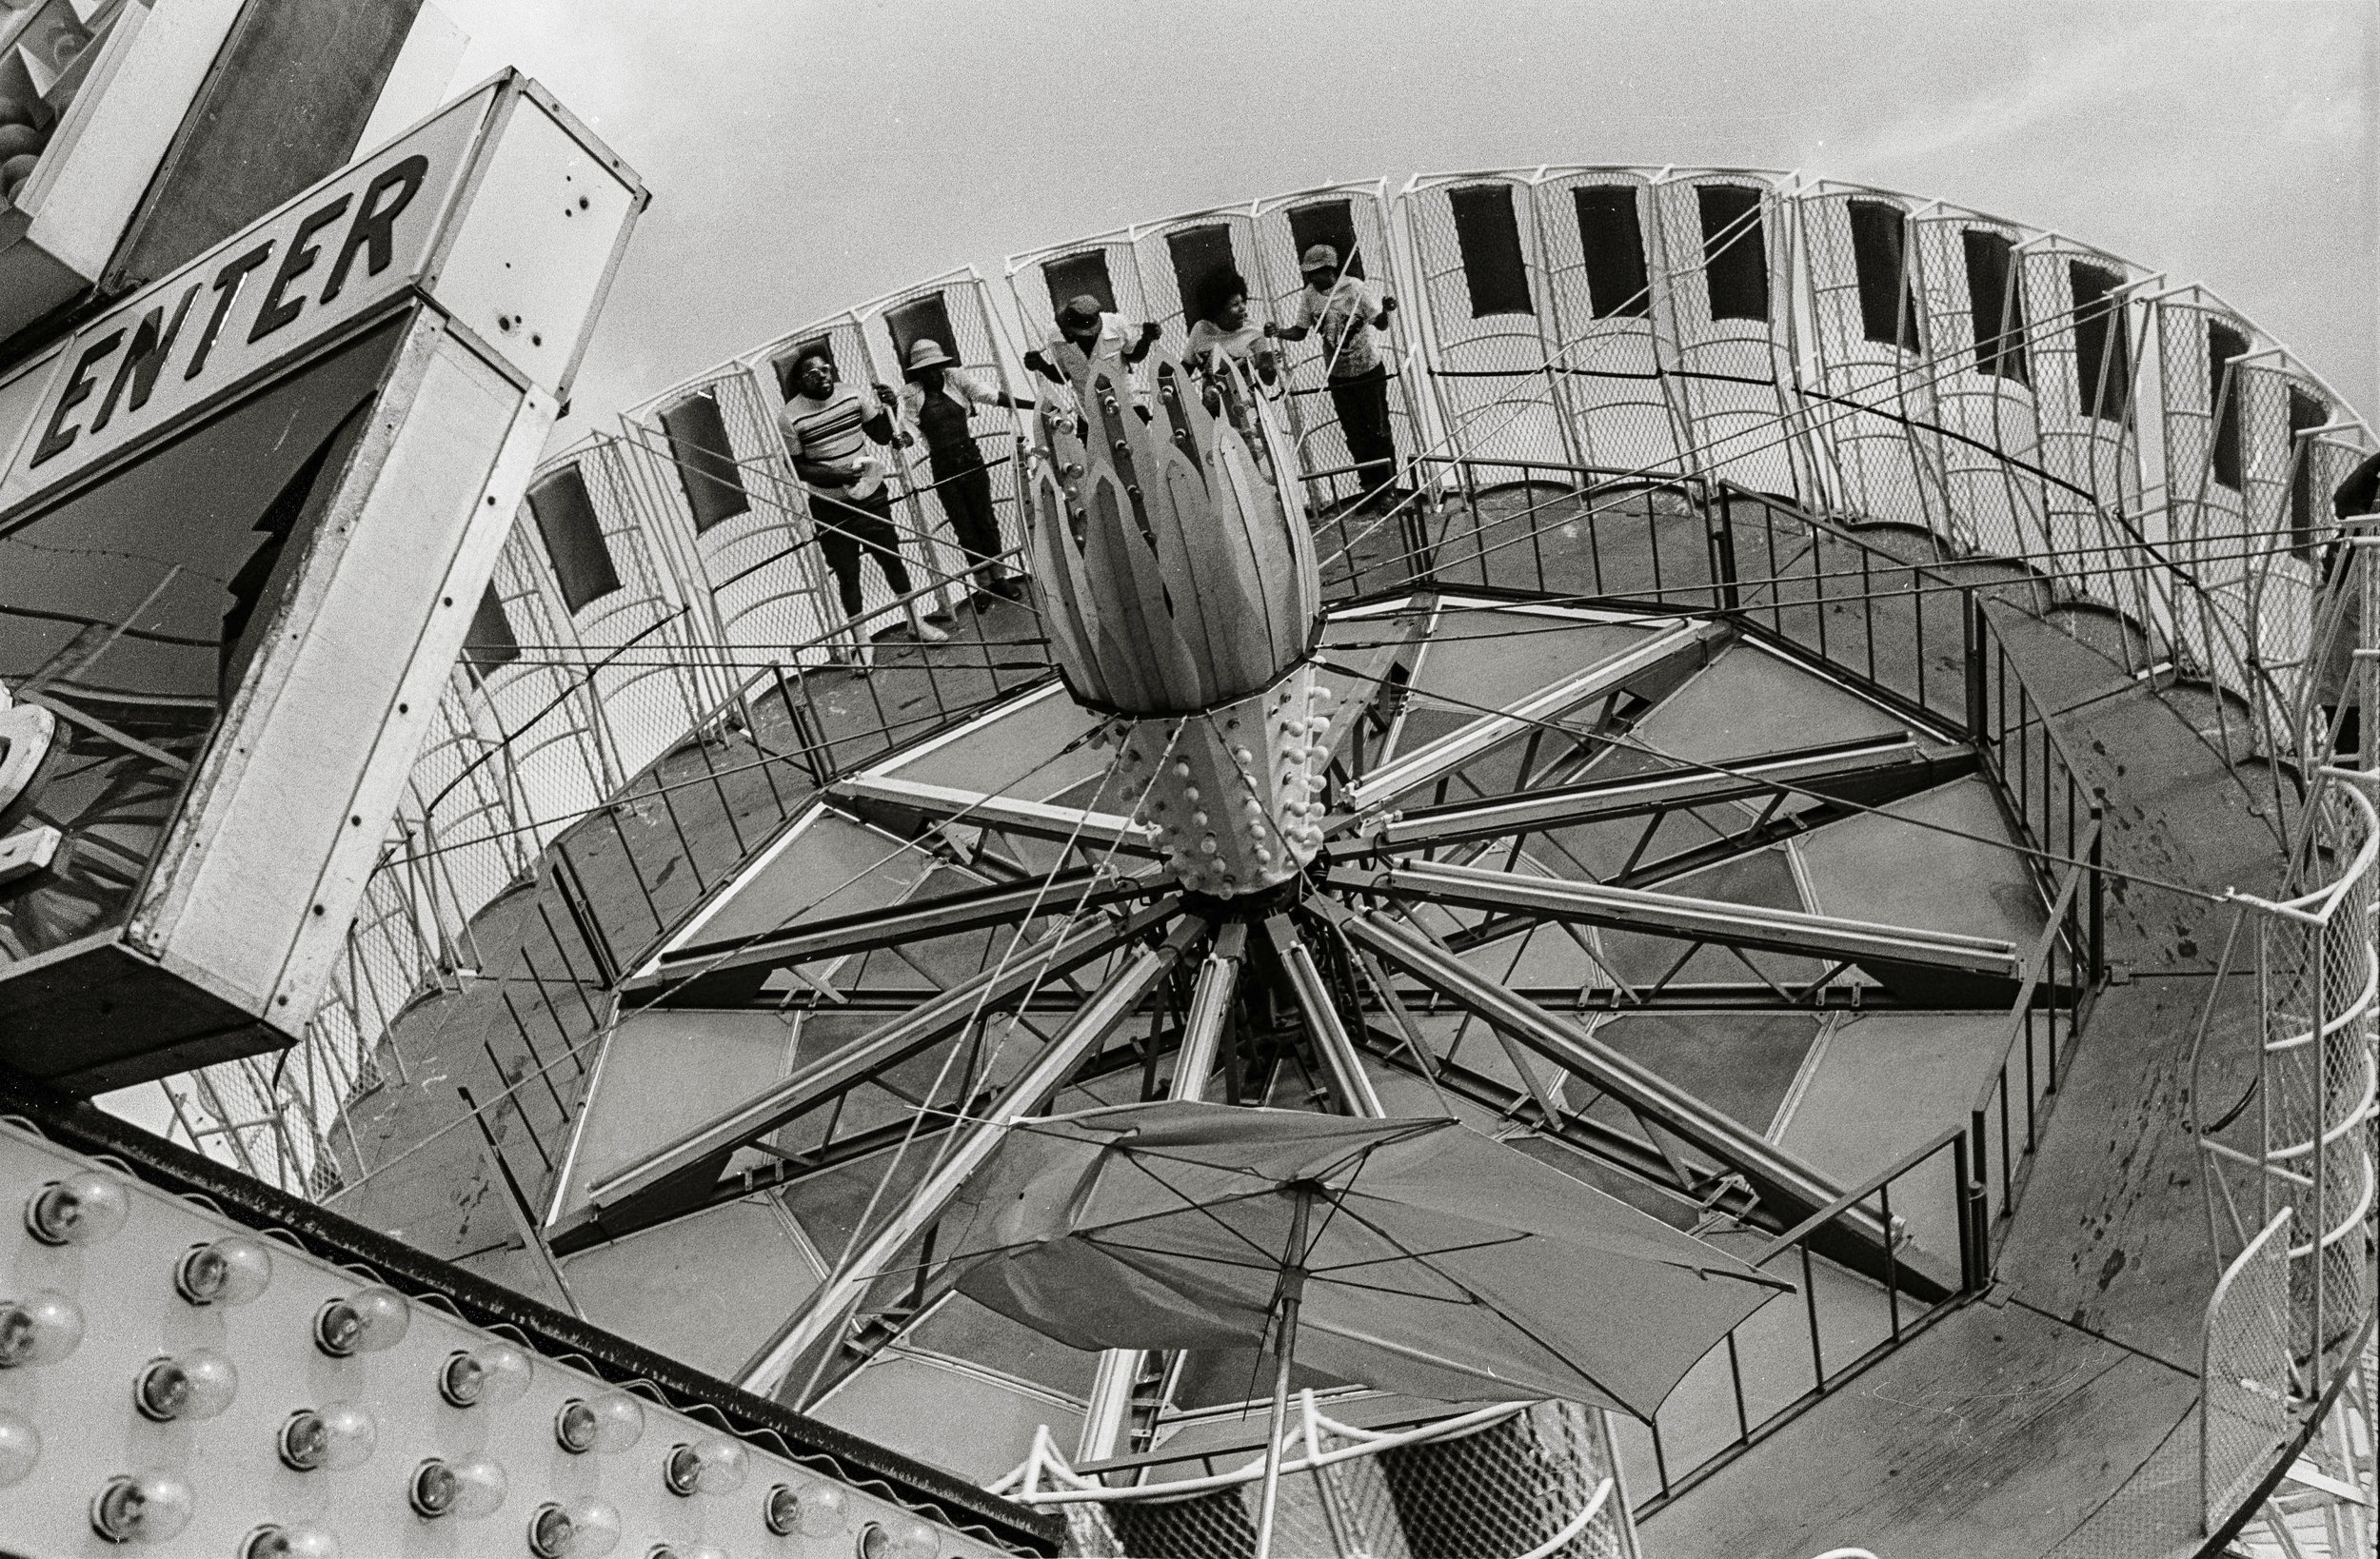   Amusement Ride, Maine, 1976  